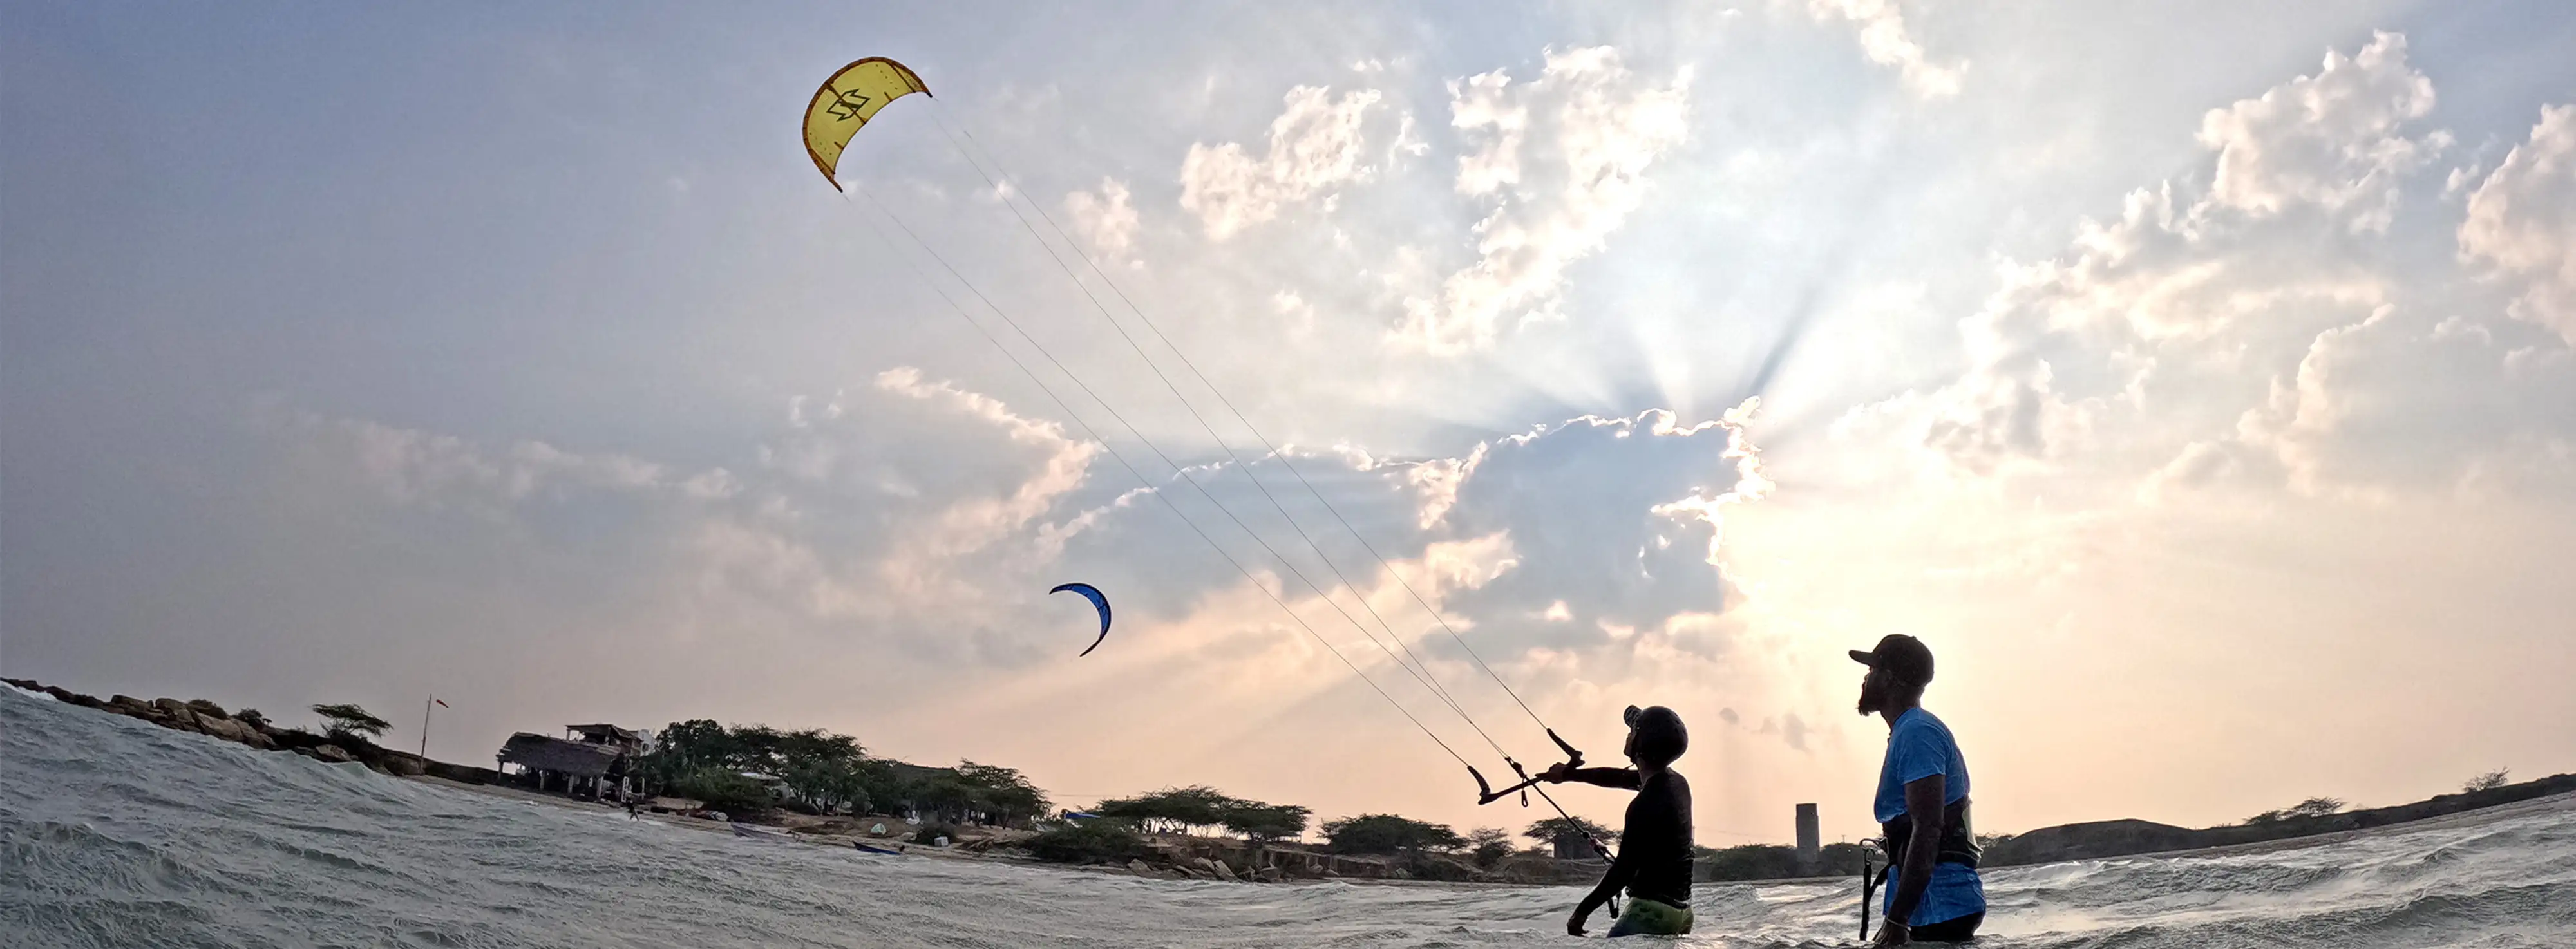 Aquaoutback: Best Kitesurfing in India